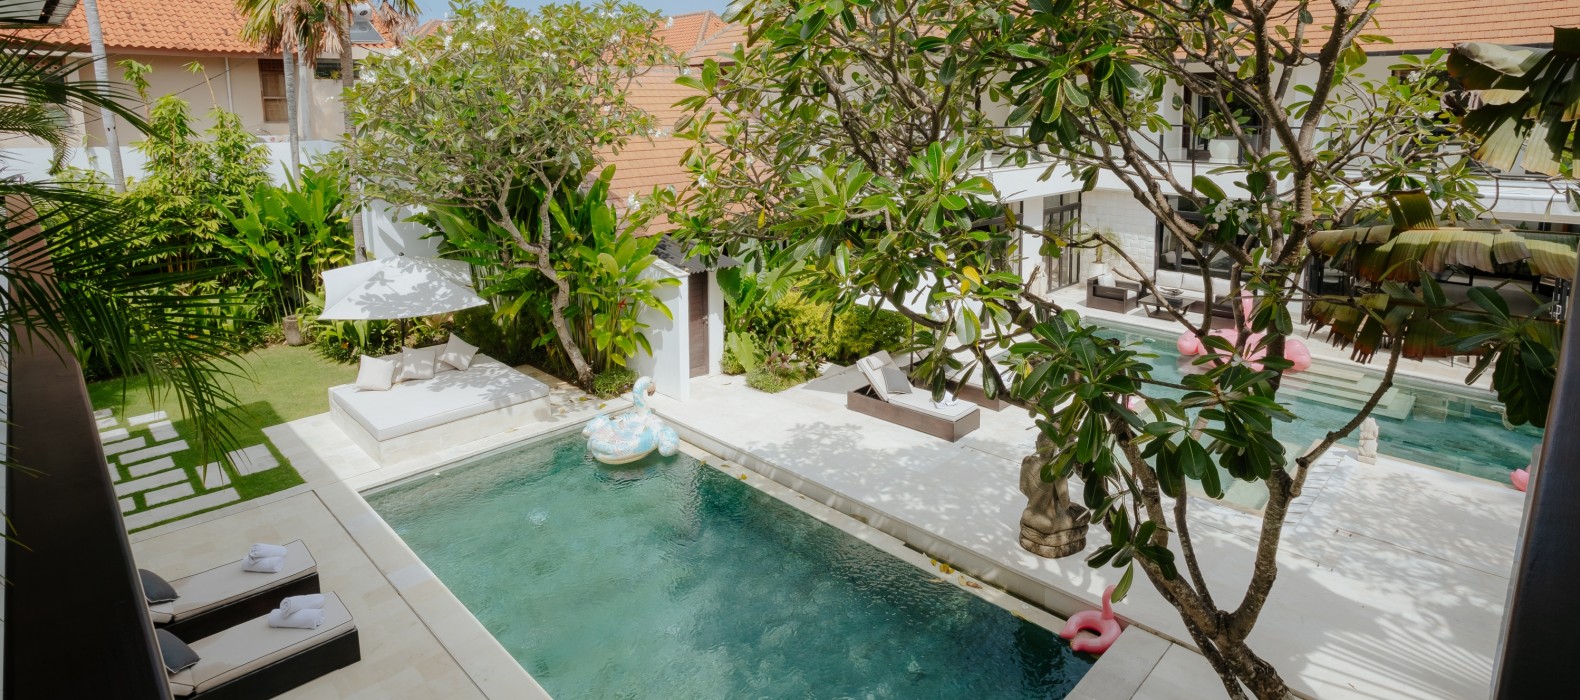 Exterior pool of Villa Groven in Bali